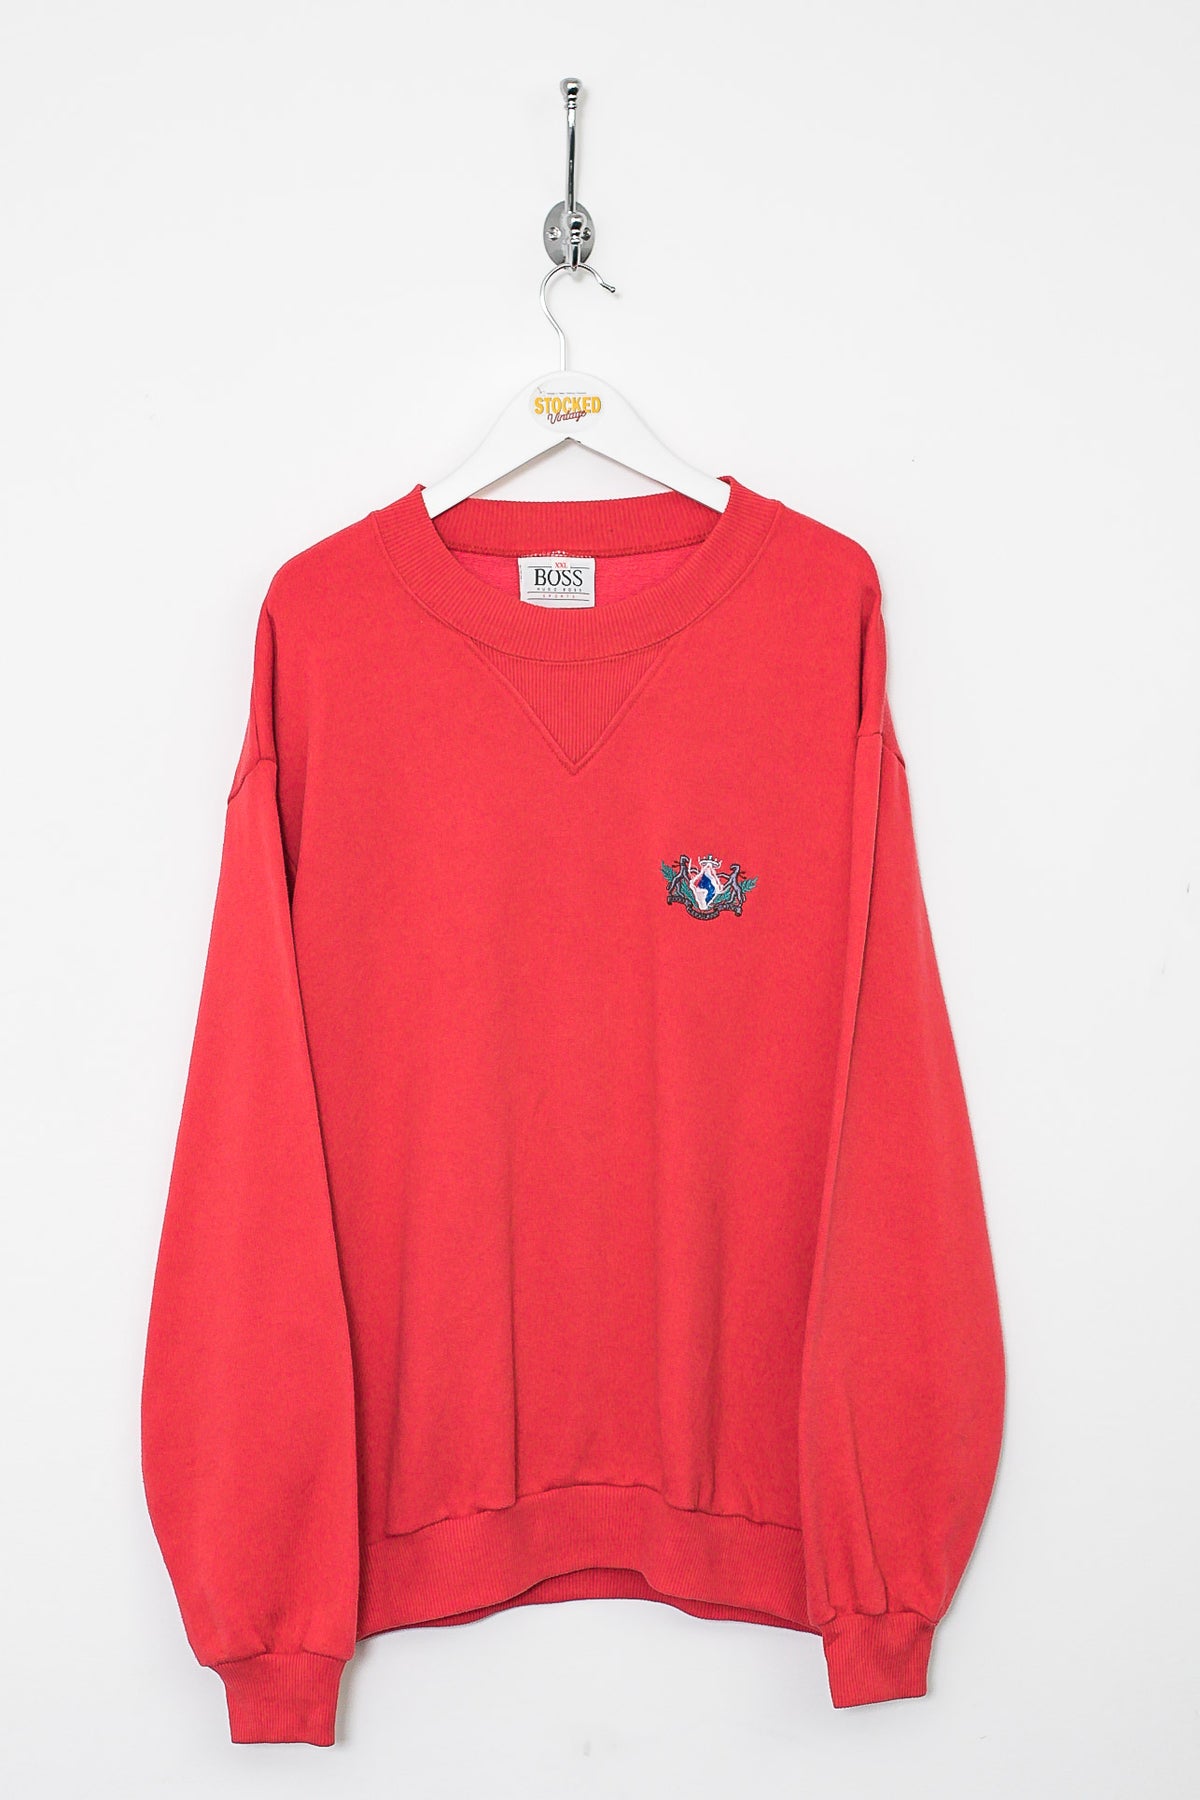 90s Hugo Boss Sweatshirt (XL)